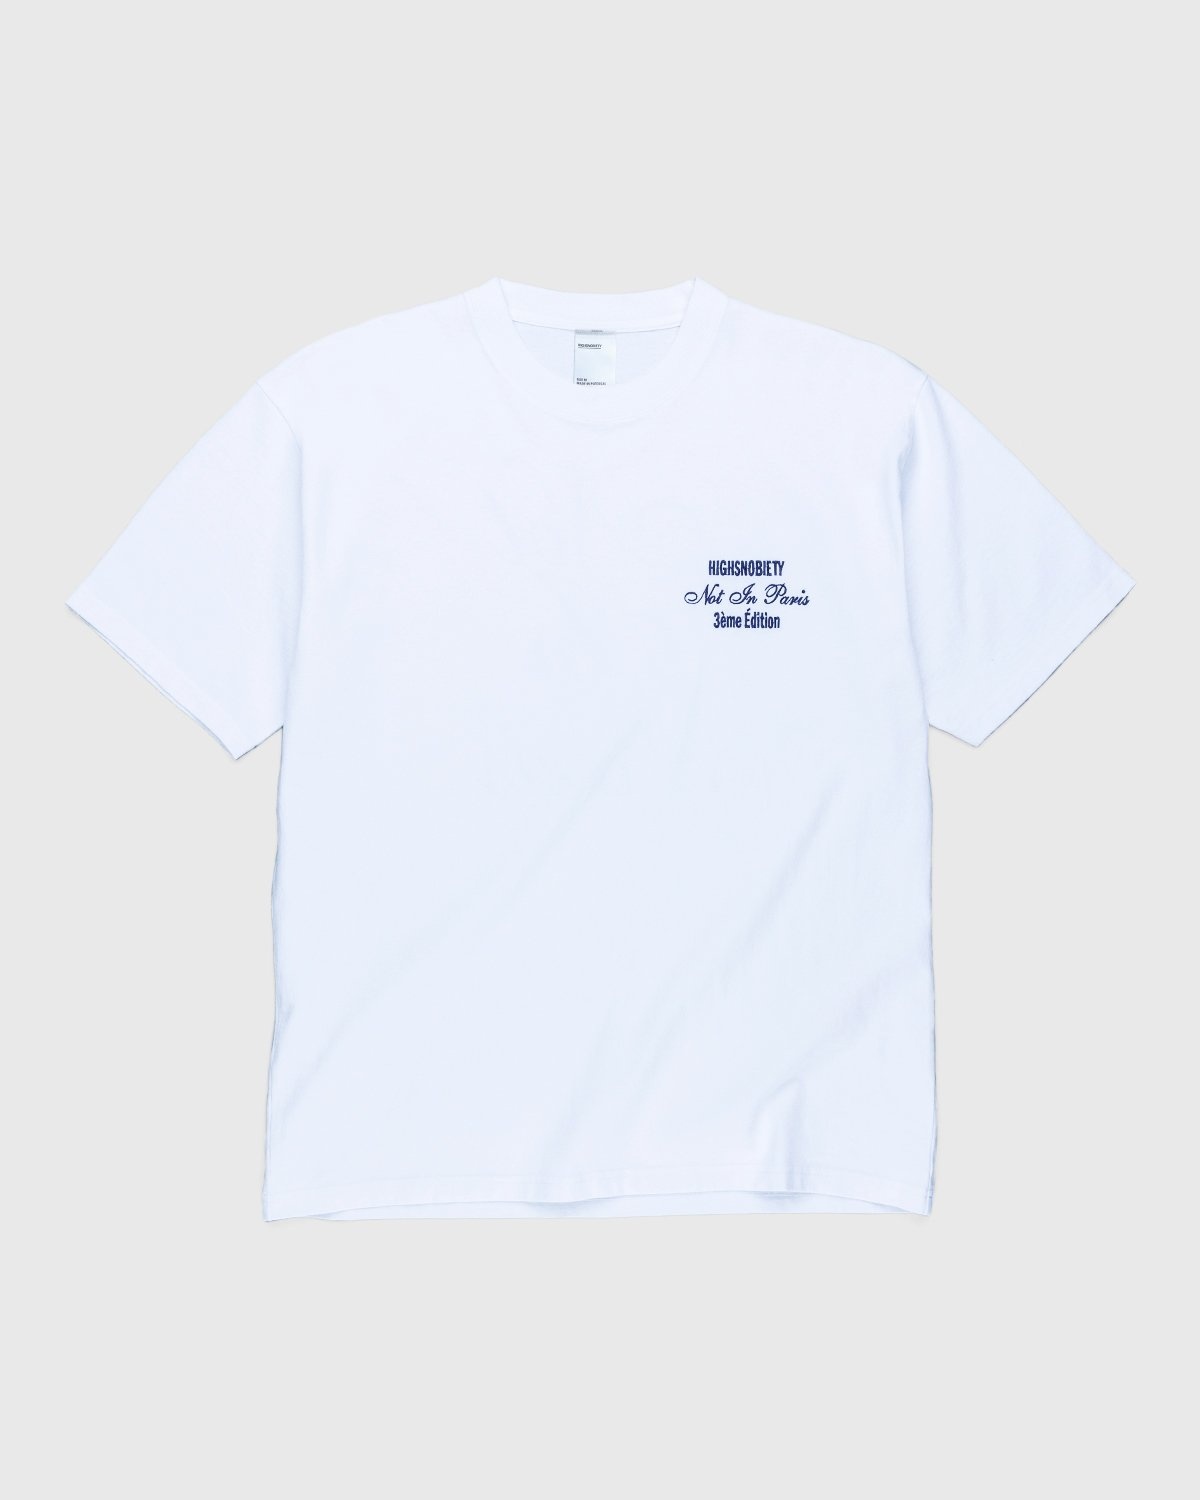 Highsnobiety – Not In Paris 3 Tour Eiffel T-Shirt White - Tops - White - Image 2